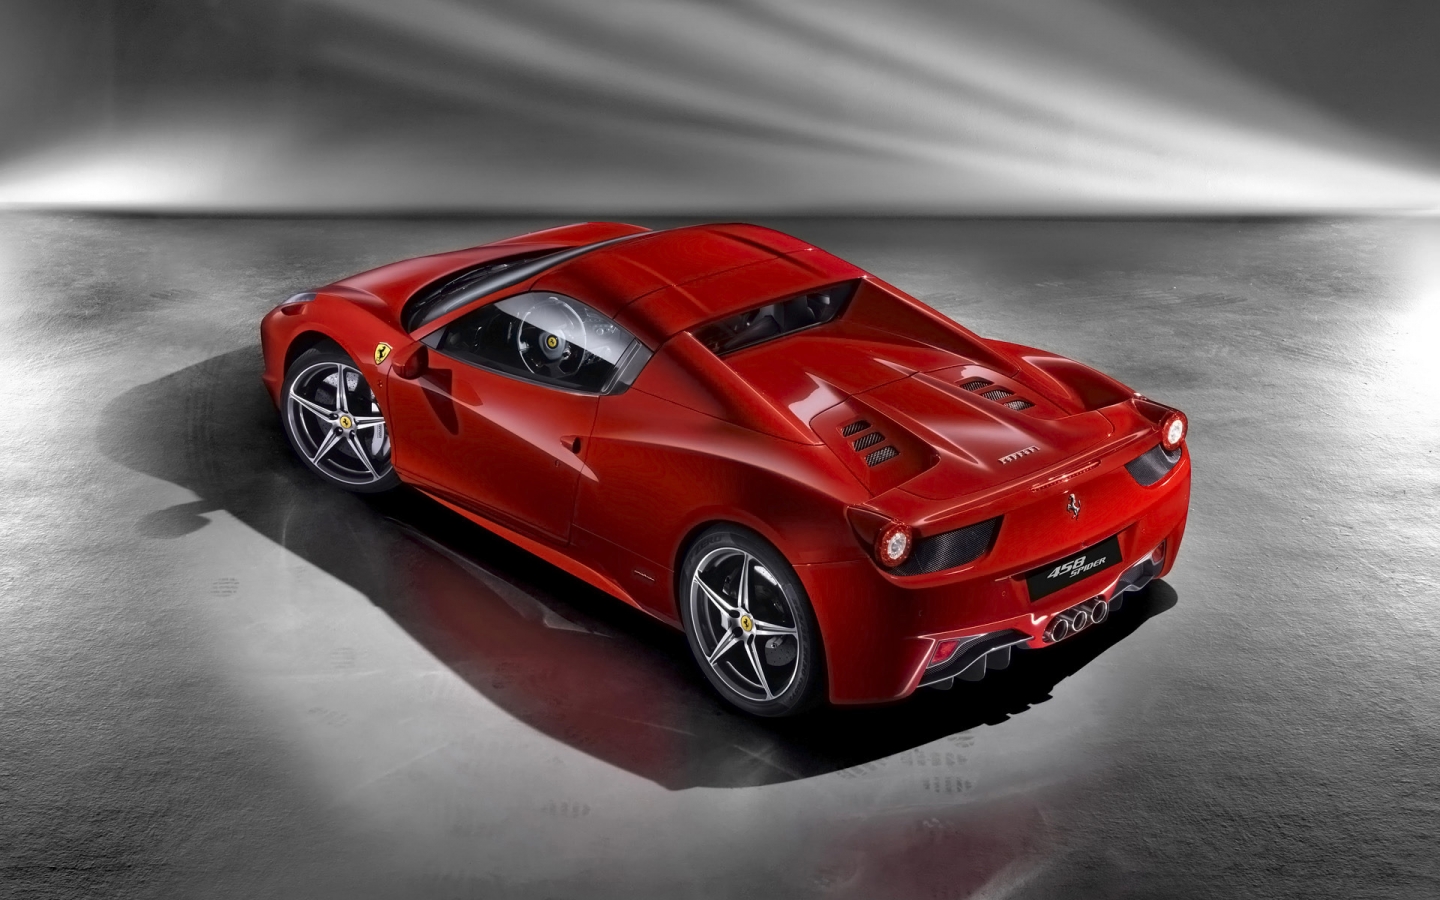 Ferrari 458 Spider 2012 Top View for 1440 x 900 widescreen resolution